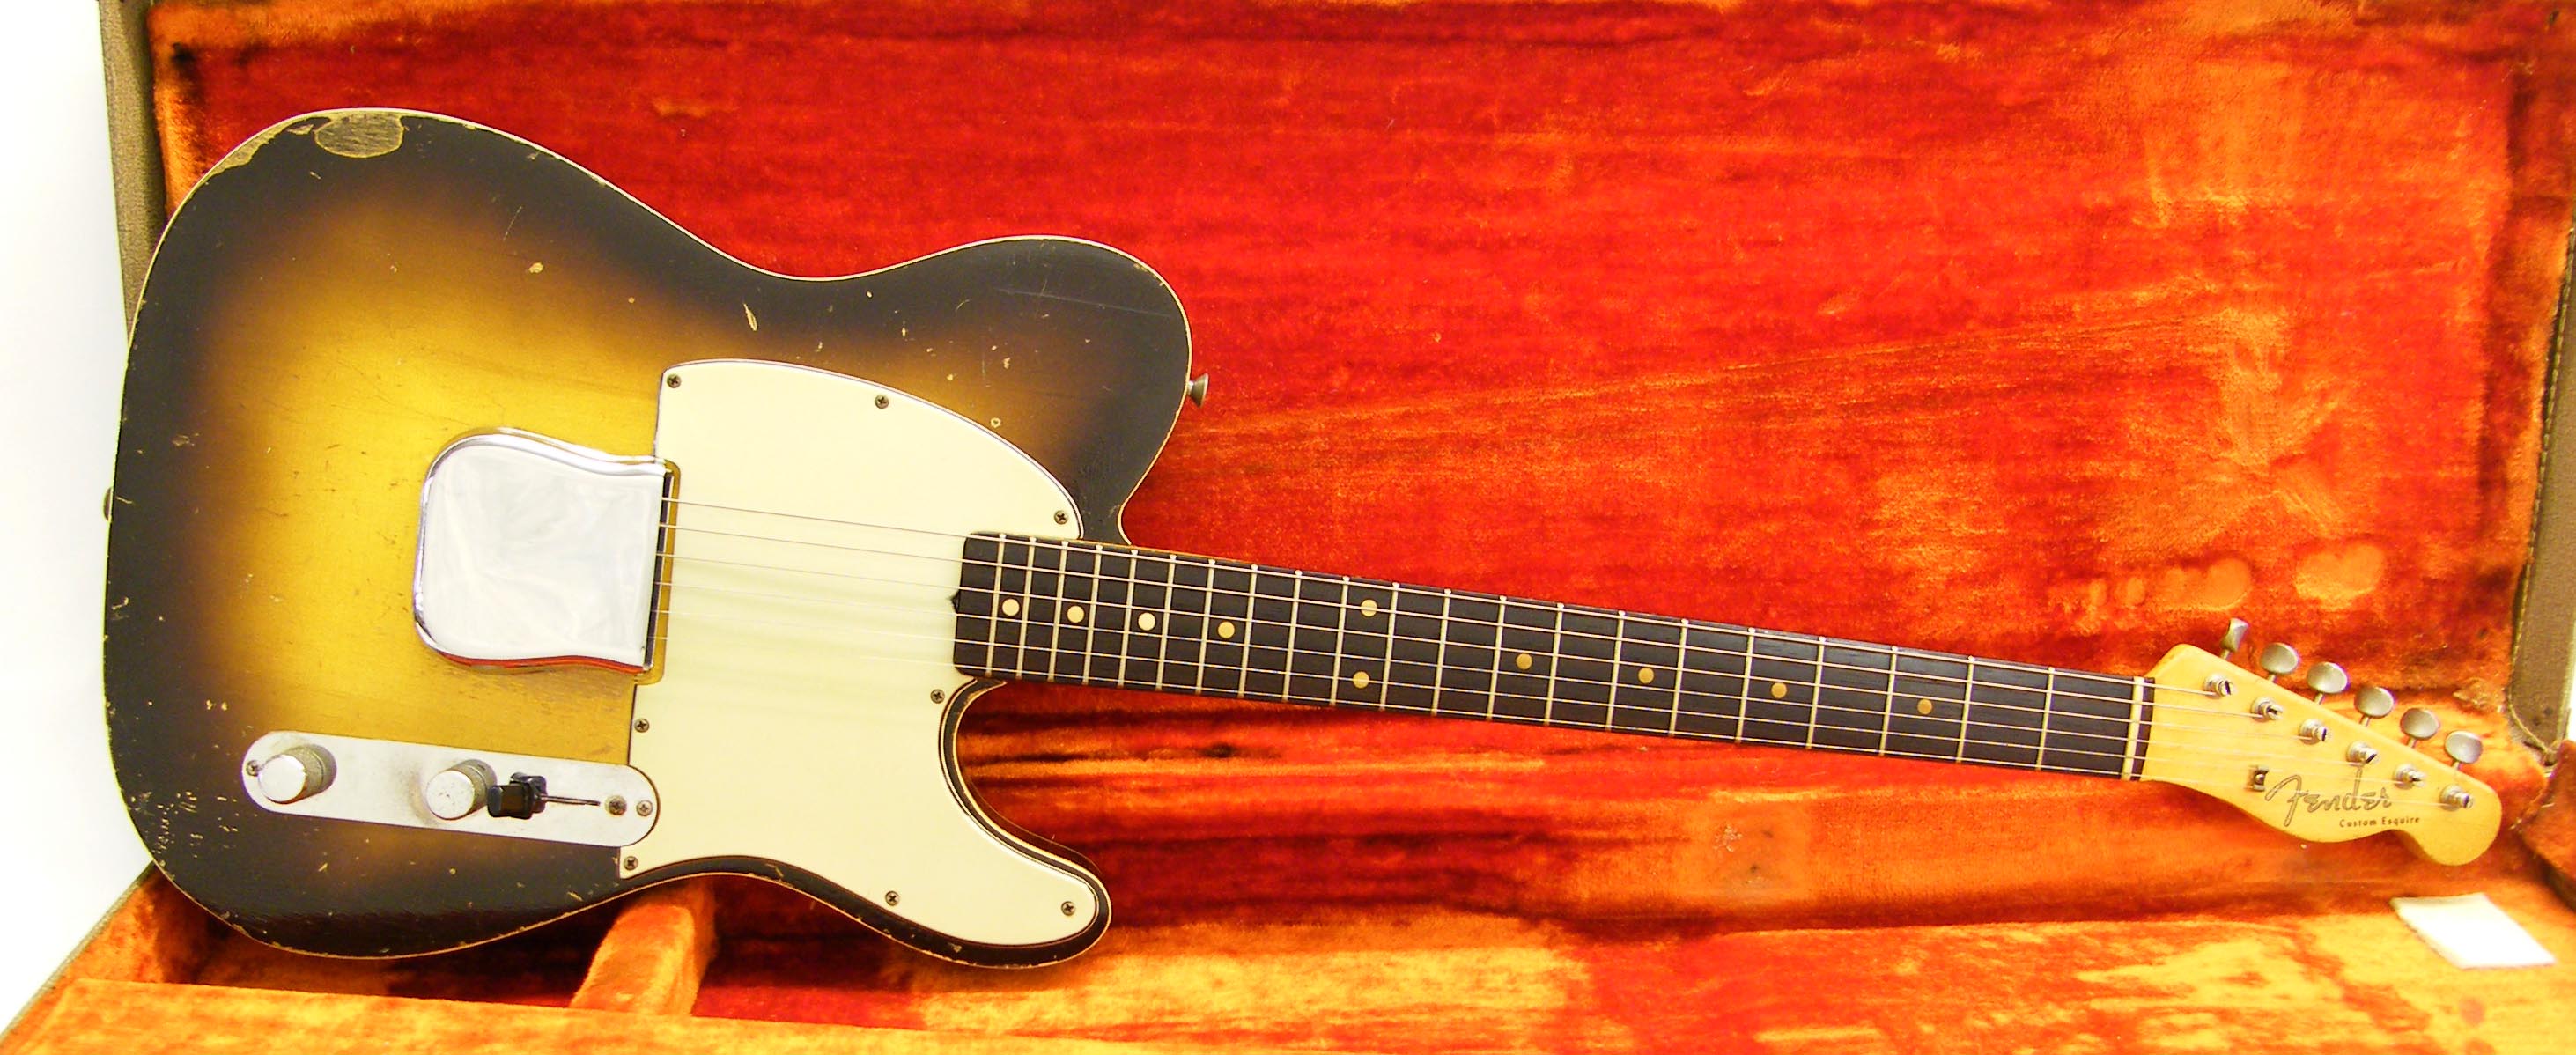 1960 Fender Custom Esquire electric guitar, made in USA, ser. no. 54146, sunburst finish with